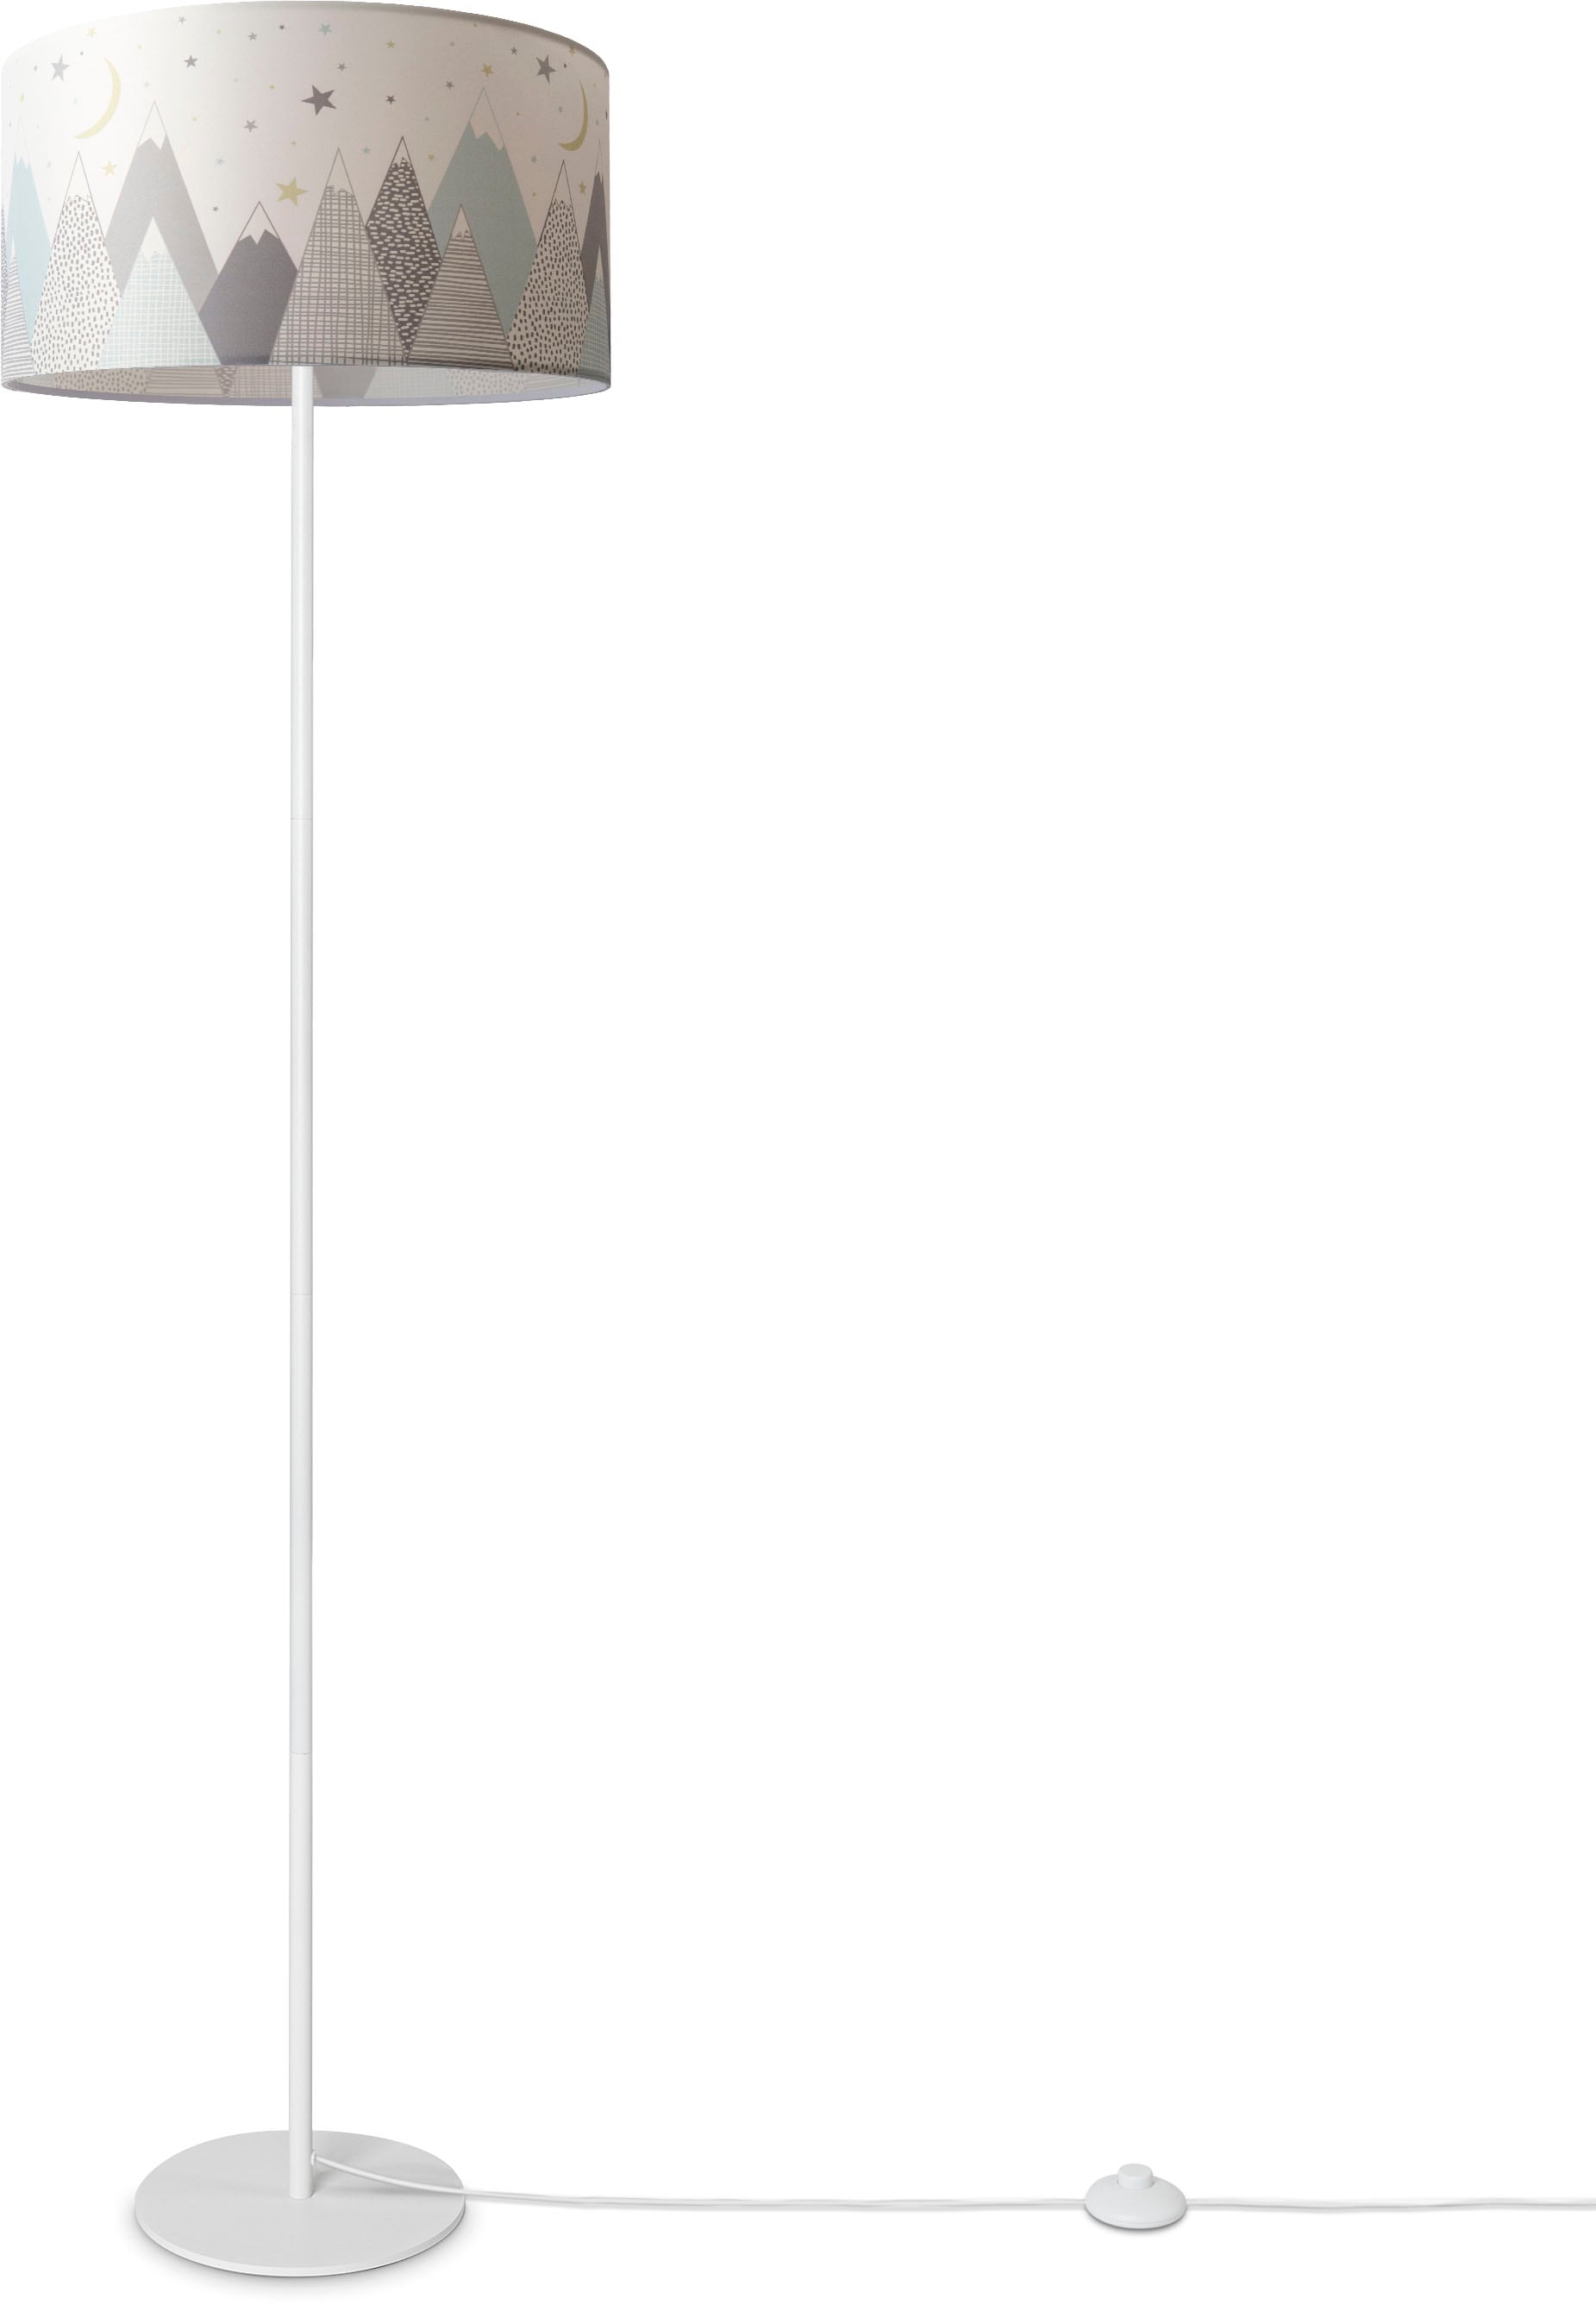 Paco Home Stehlampe »Luca Kinder Wolken Babyzimmer Cosmo«, Stehlampe Lampenschirm online kaufen Stoff Lampe Berge